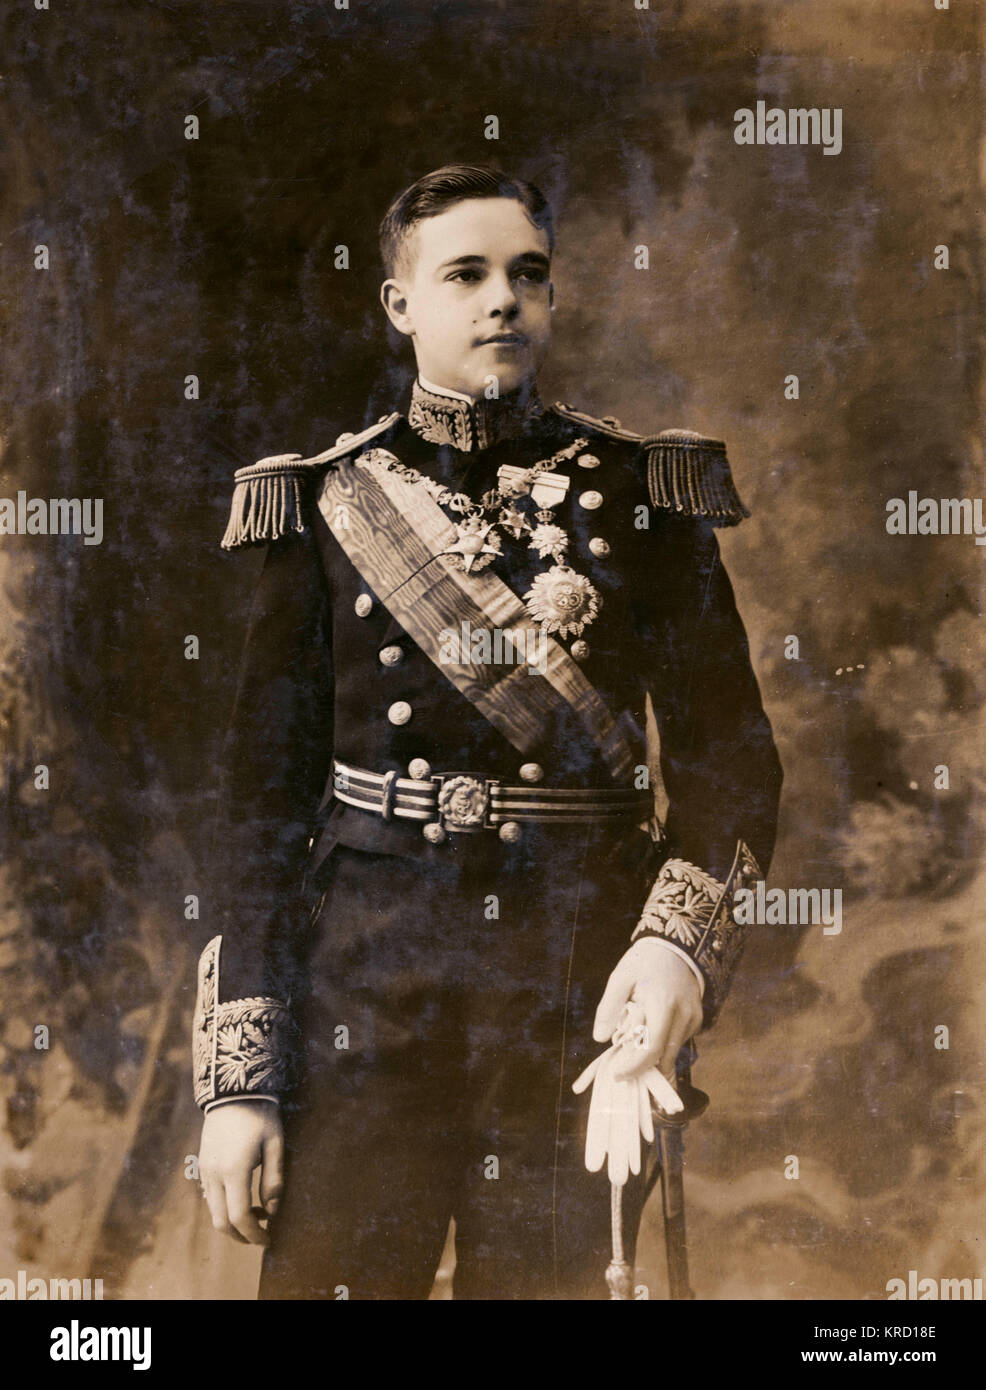 King Manuel II of Portugal Stock Photo